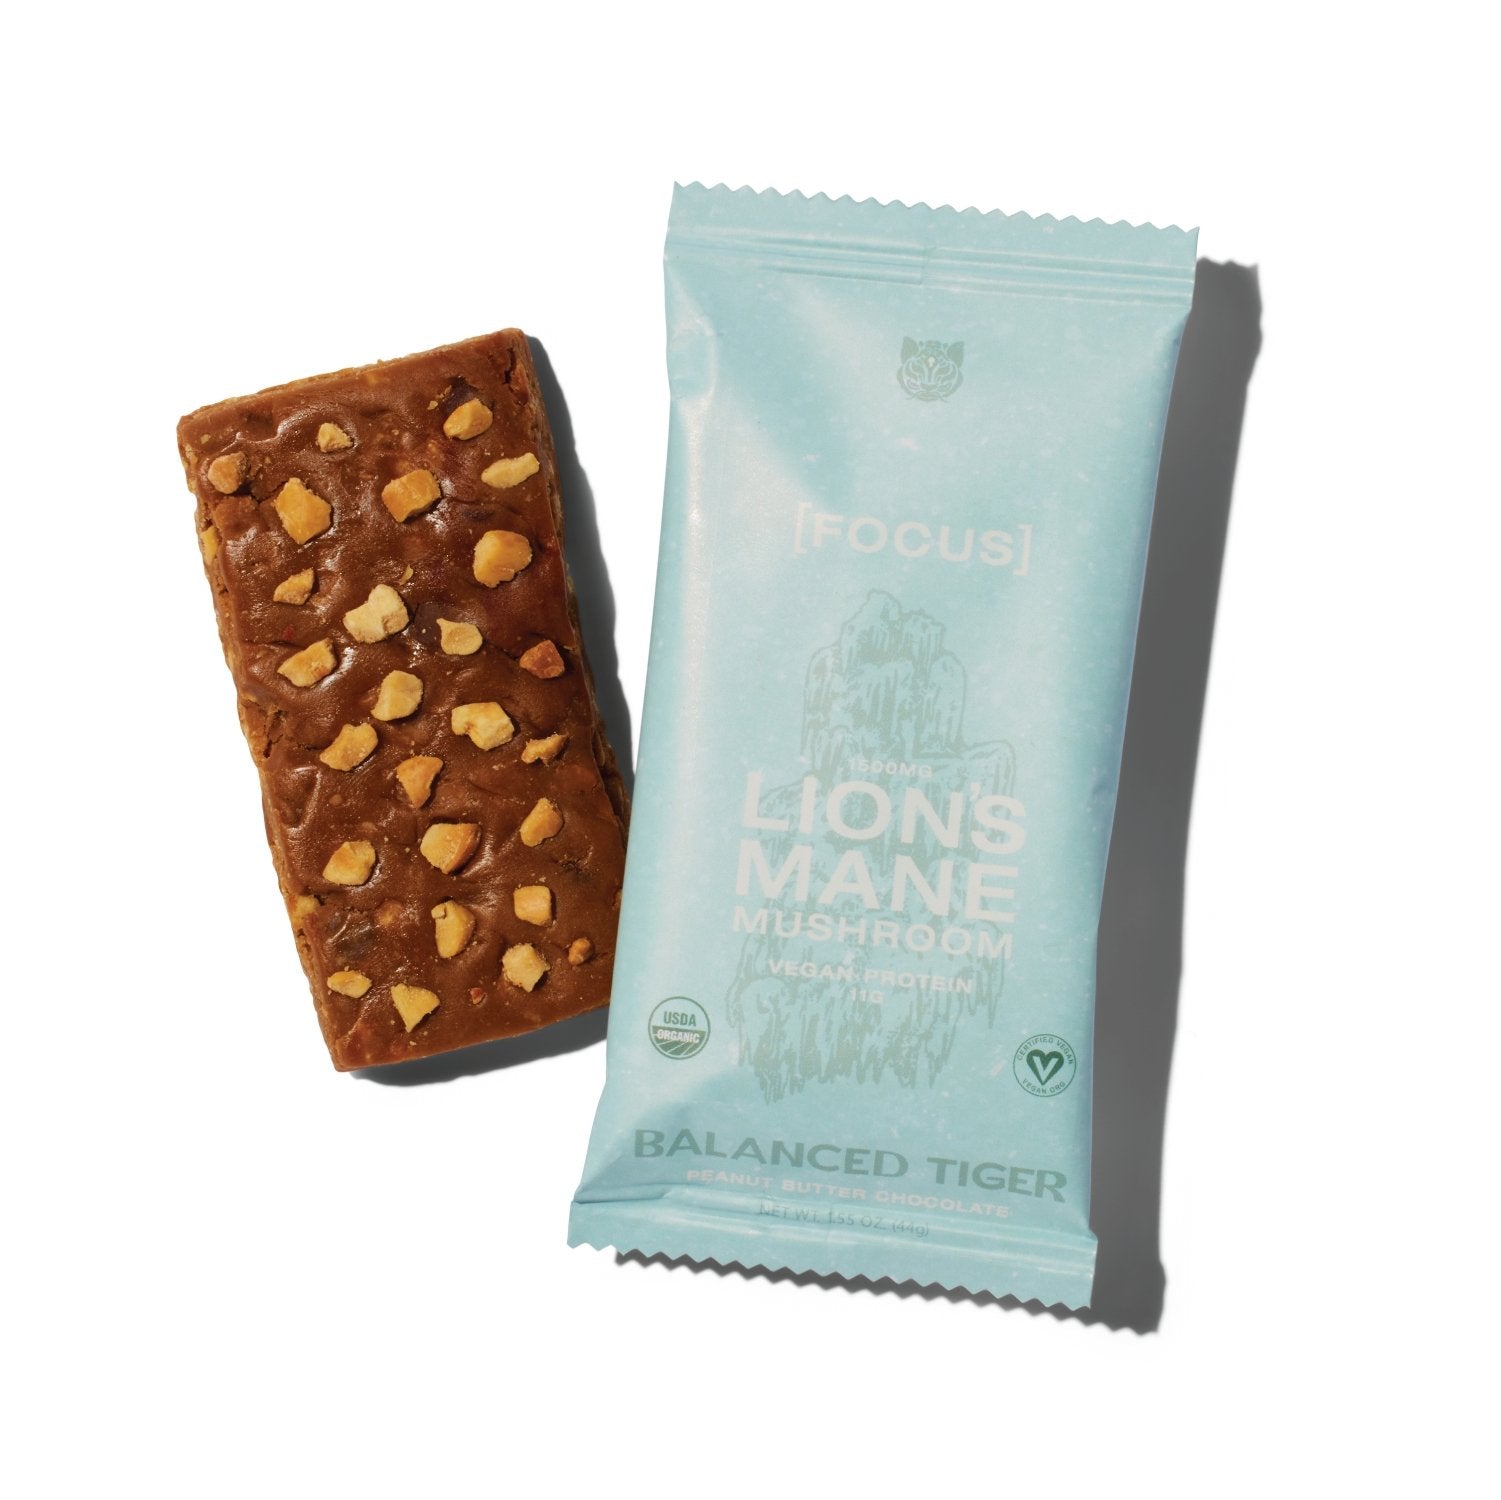 Balanced Tiger Lion's Mane Peanut Butter Chocolate [FOCUS] - Multiverse